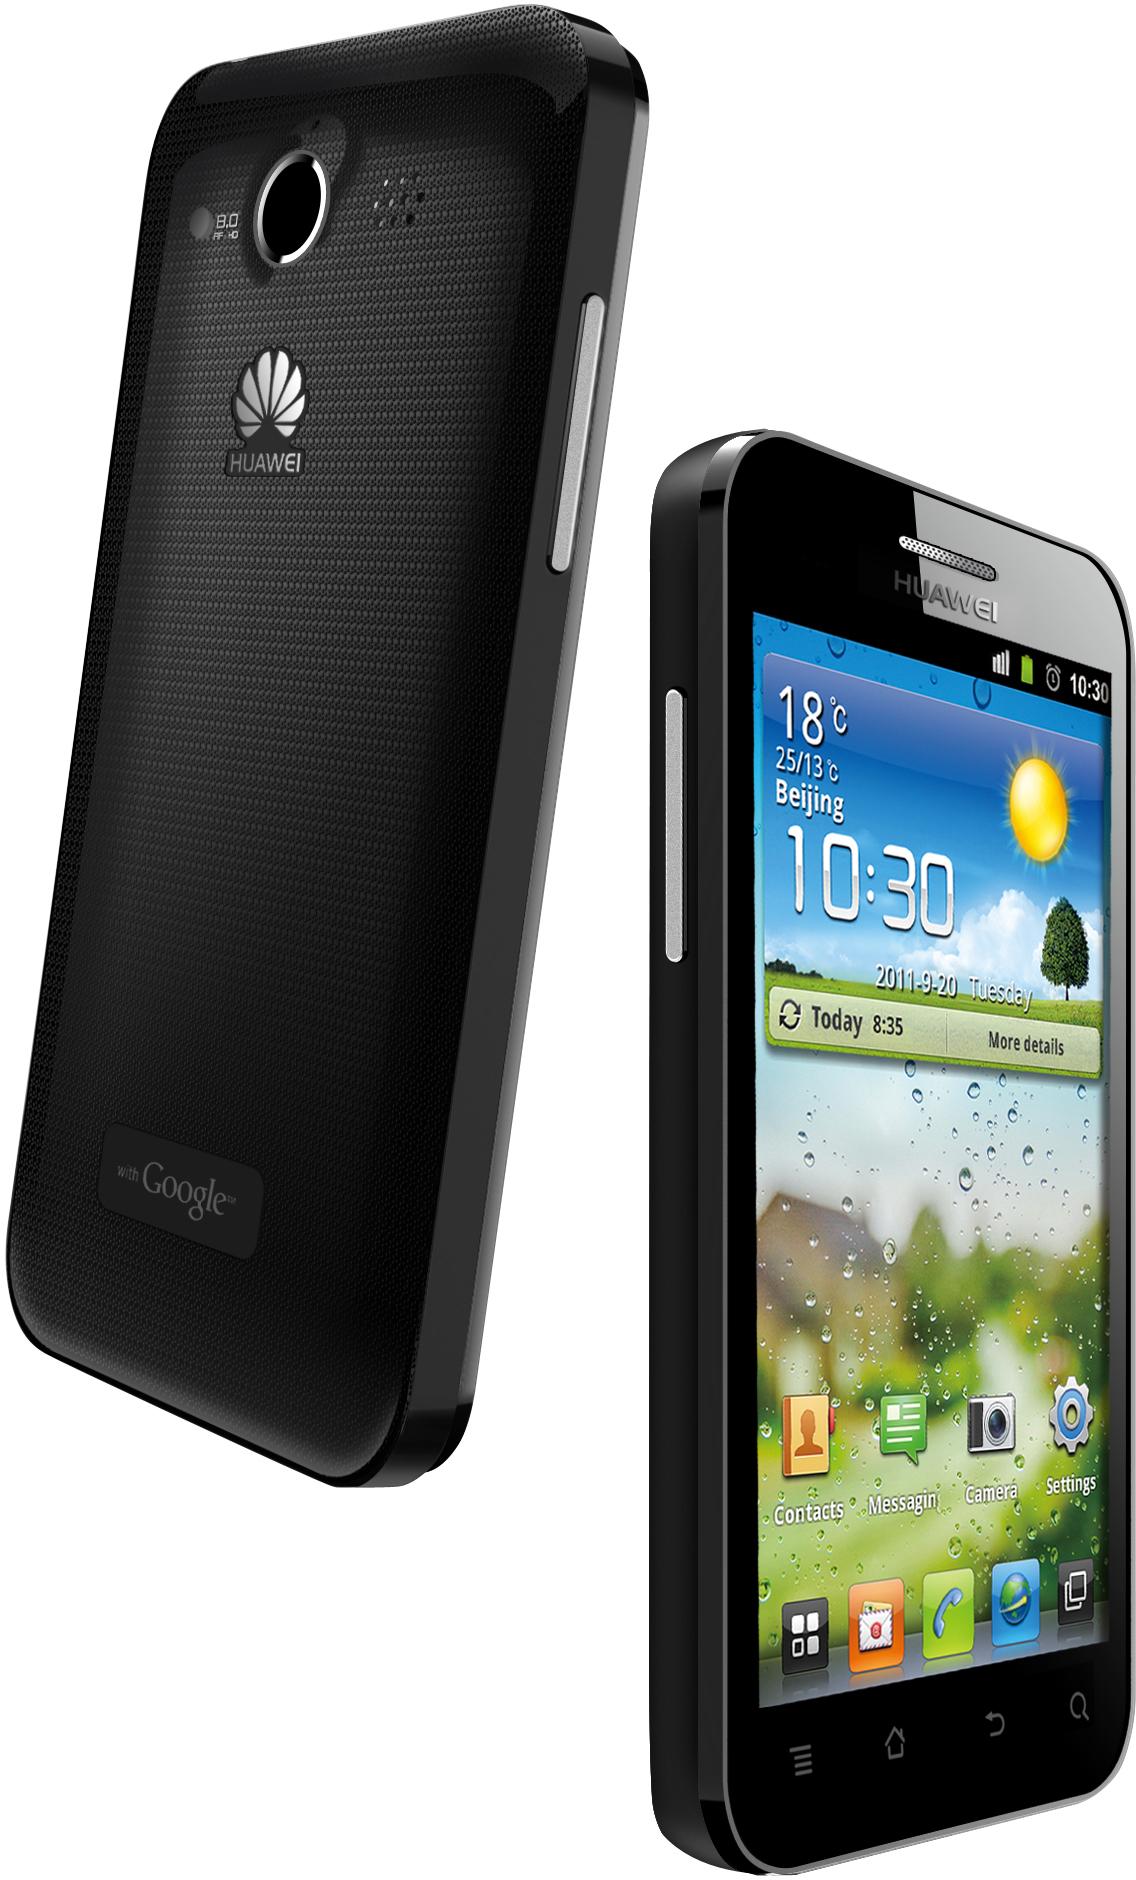 Huawei U8860 Honor specs, review, release date - PhonesData